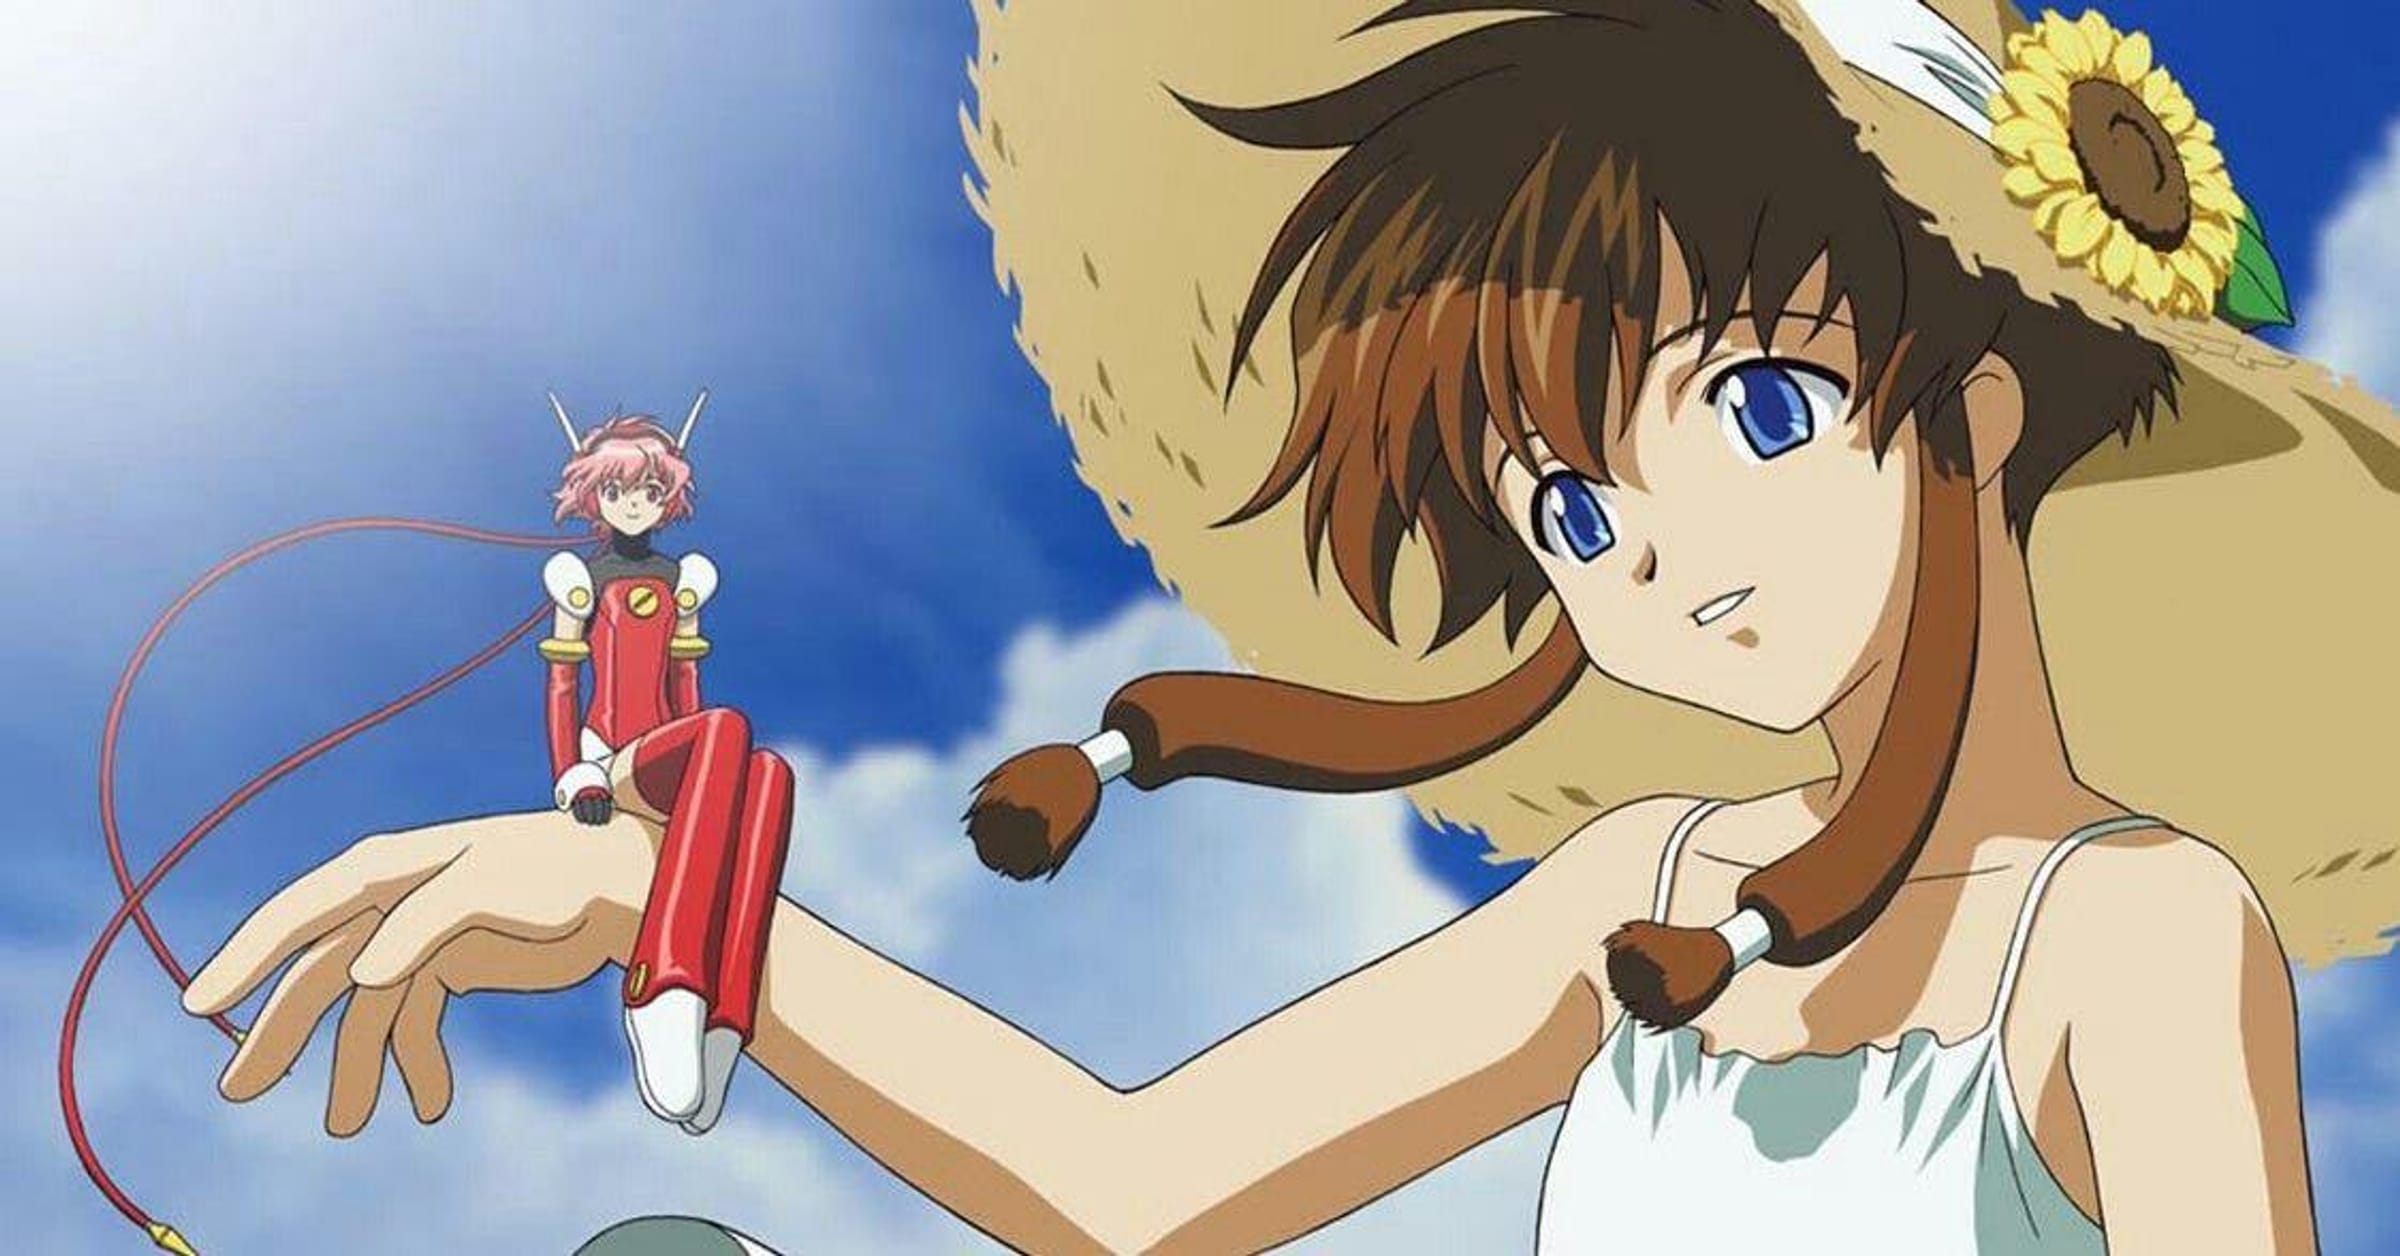 Koito Minase/Gallery  Anime, Anime girl, Anime episodes